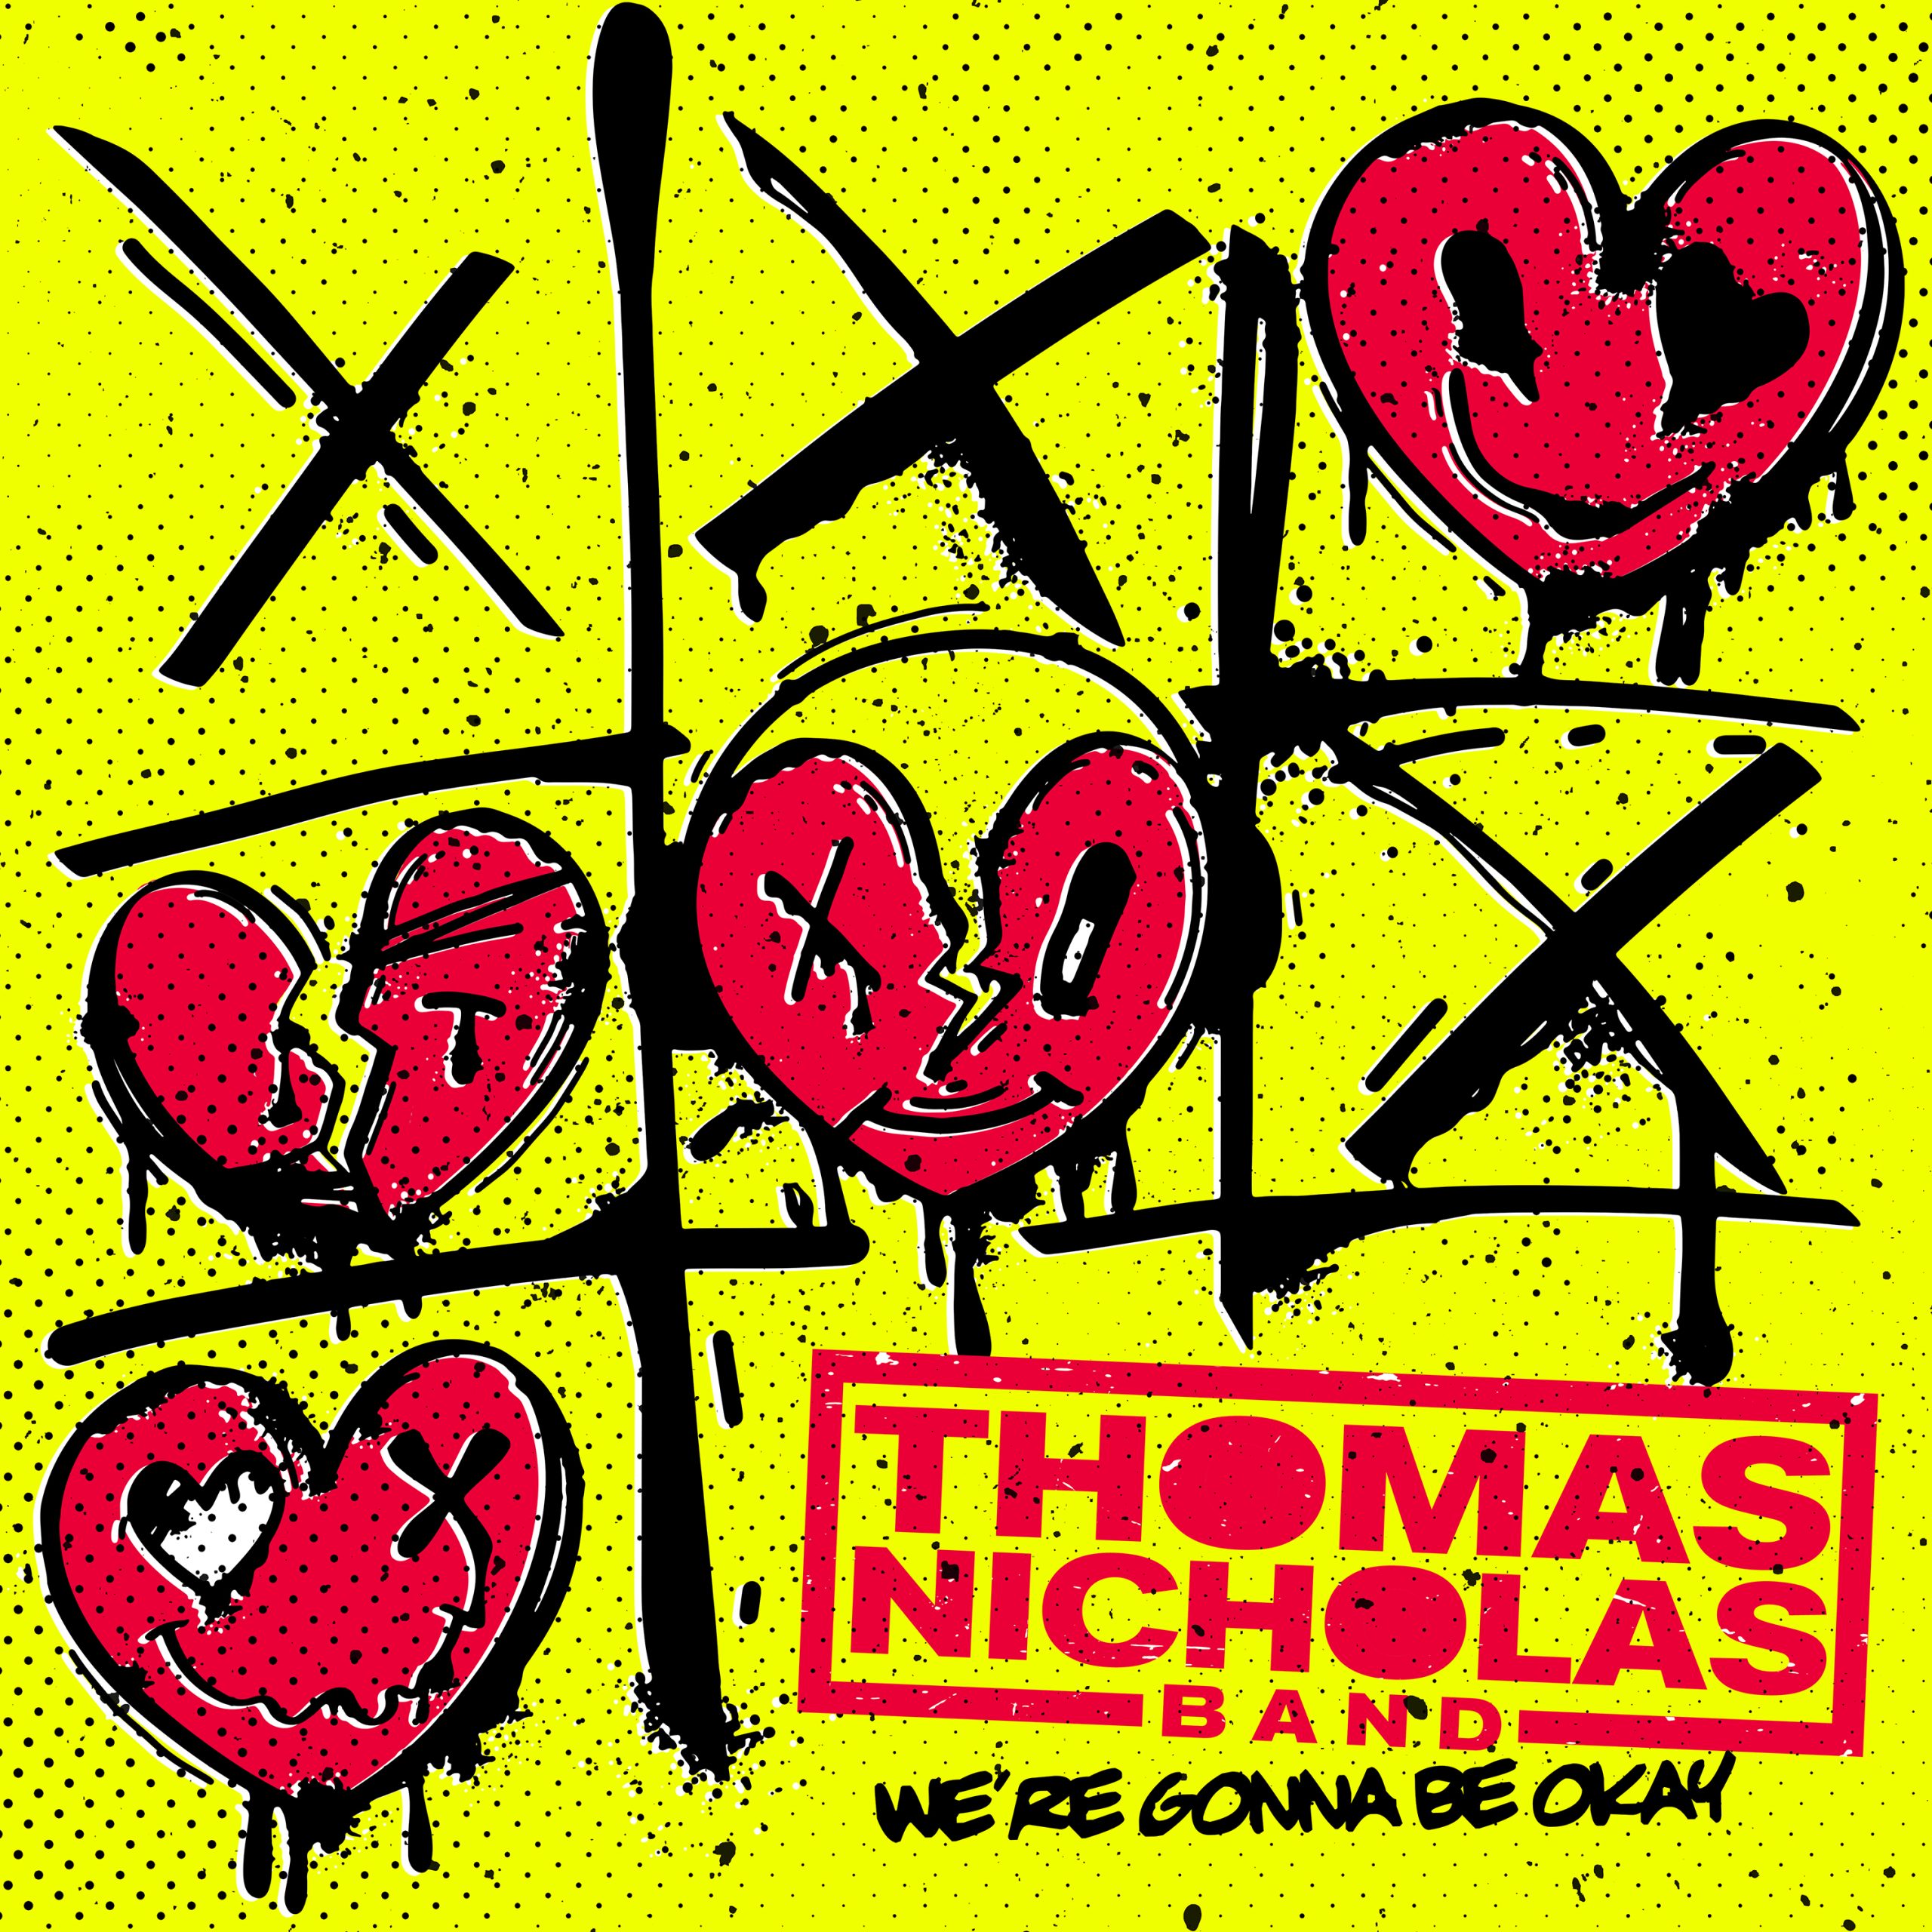 Thomas Nicholas Band We're Gonna Be Okay Album Cover